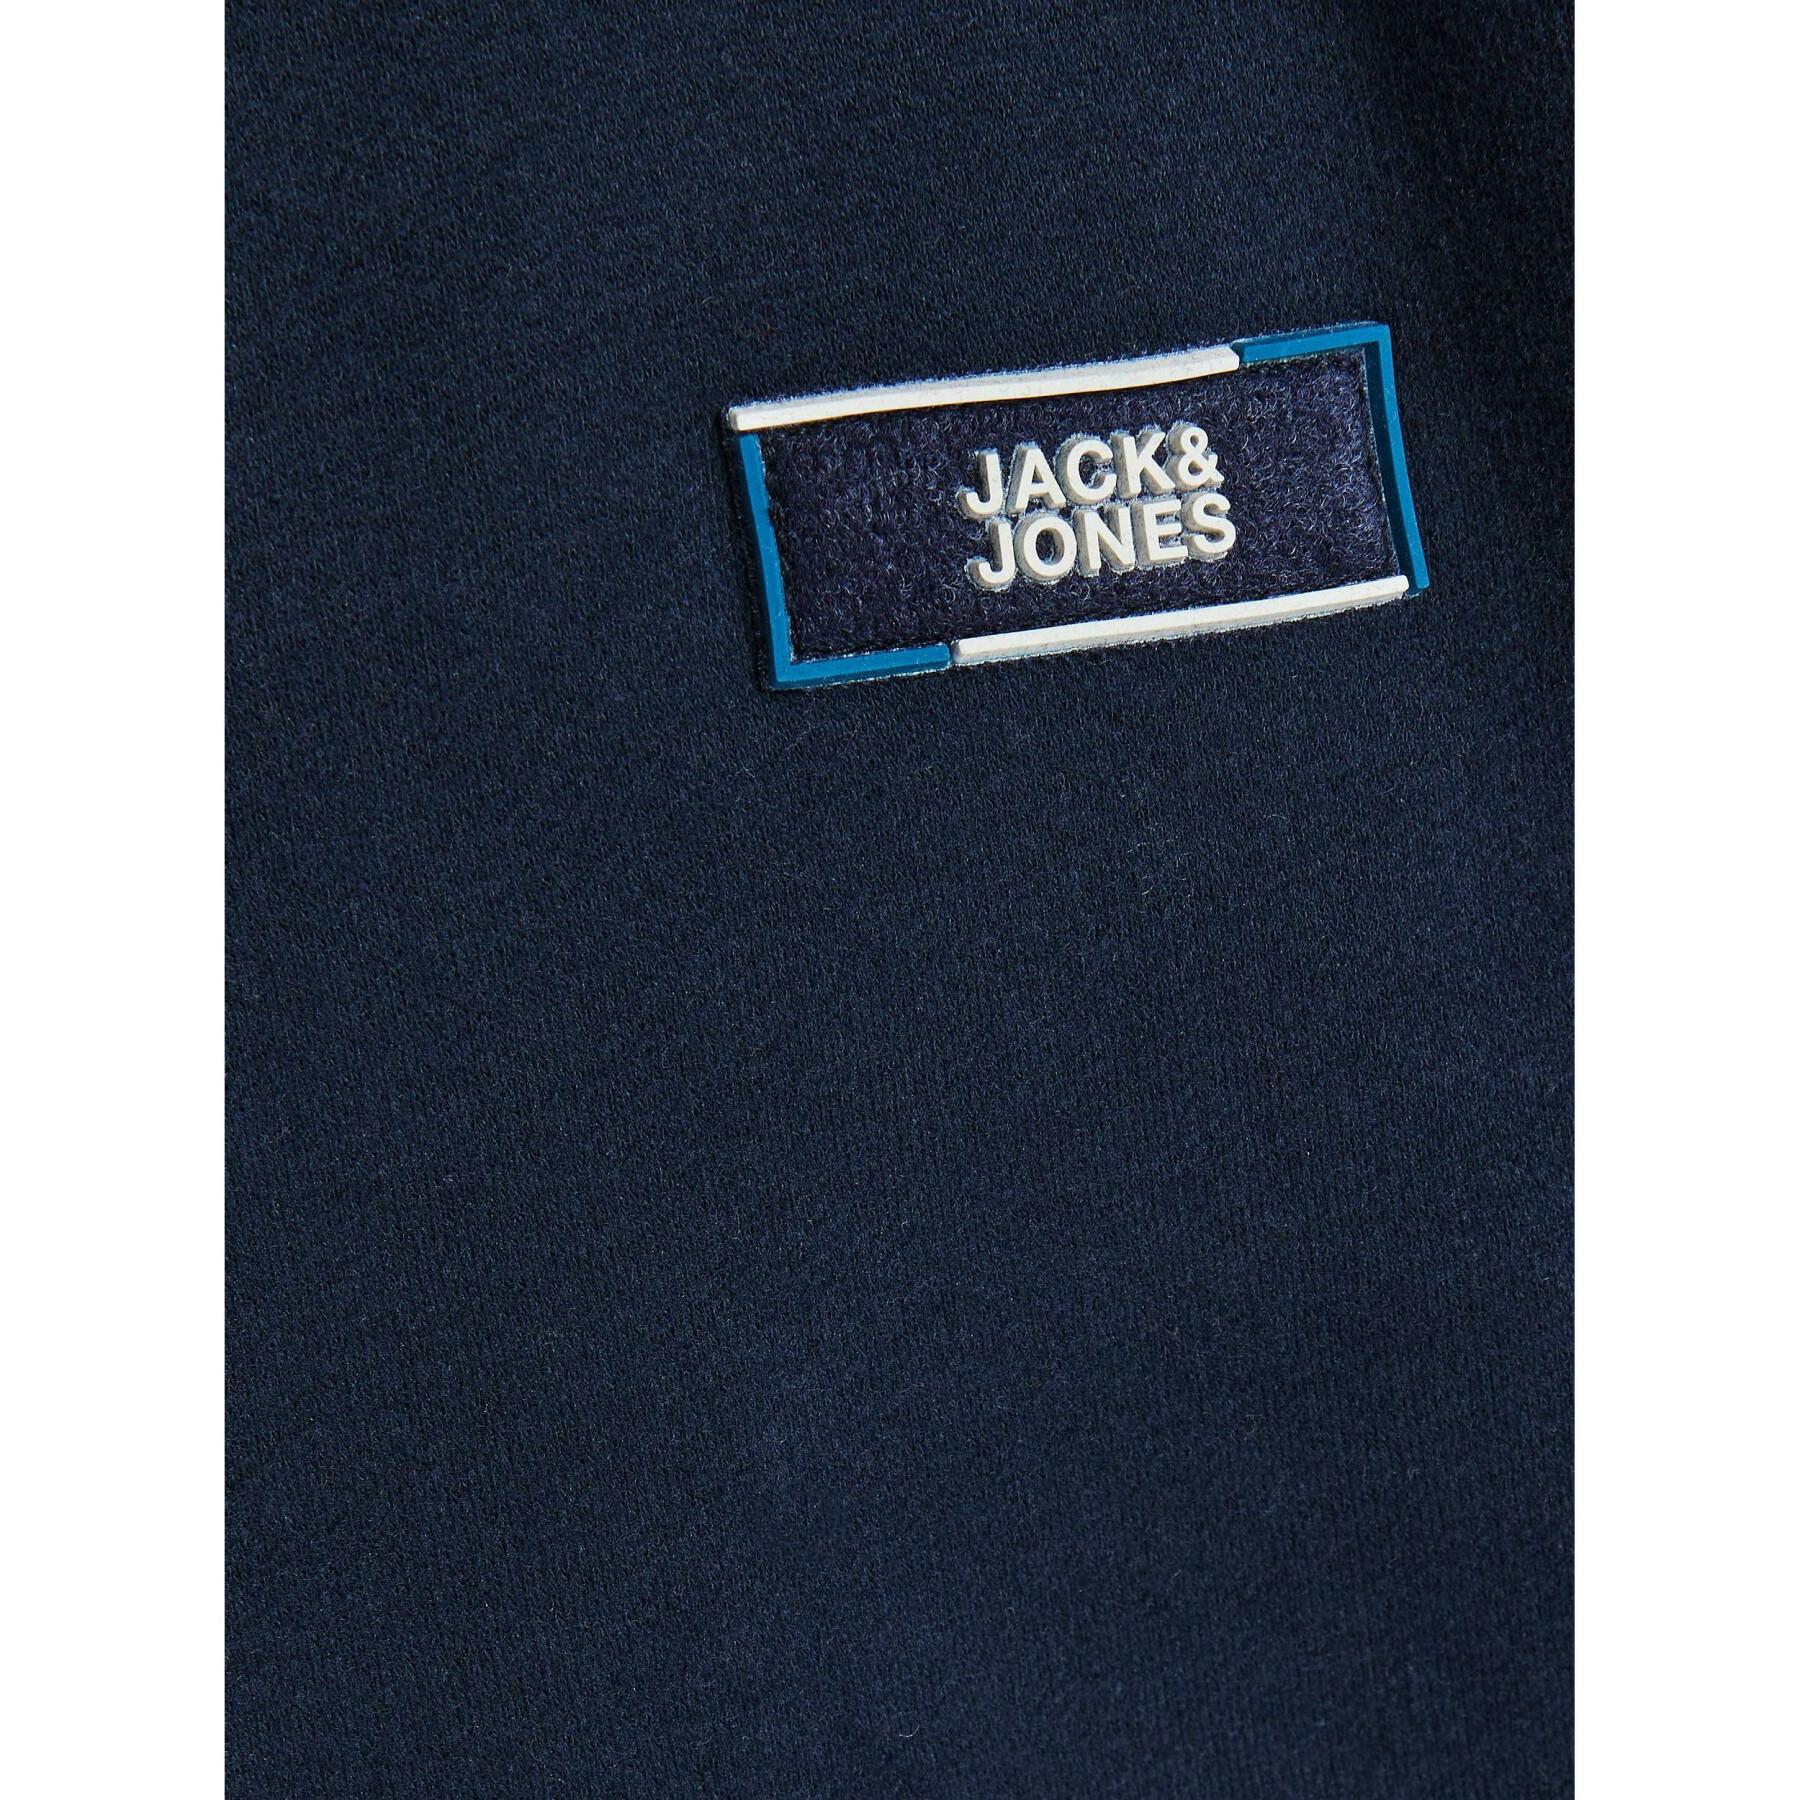 Sweatshirt child Jack & Jones Classic